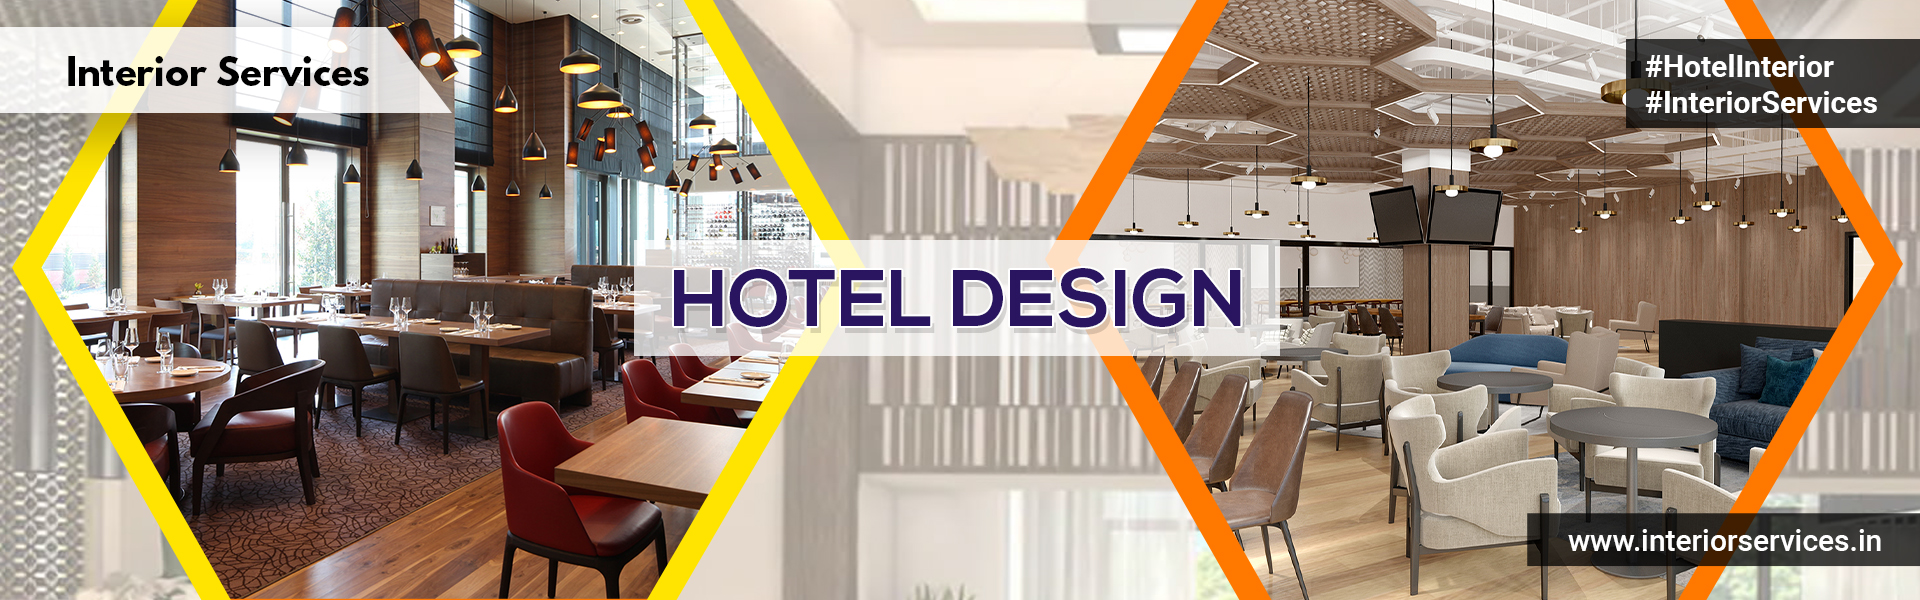 Interior Services Hotel Design Image